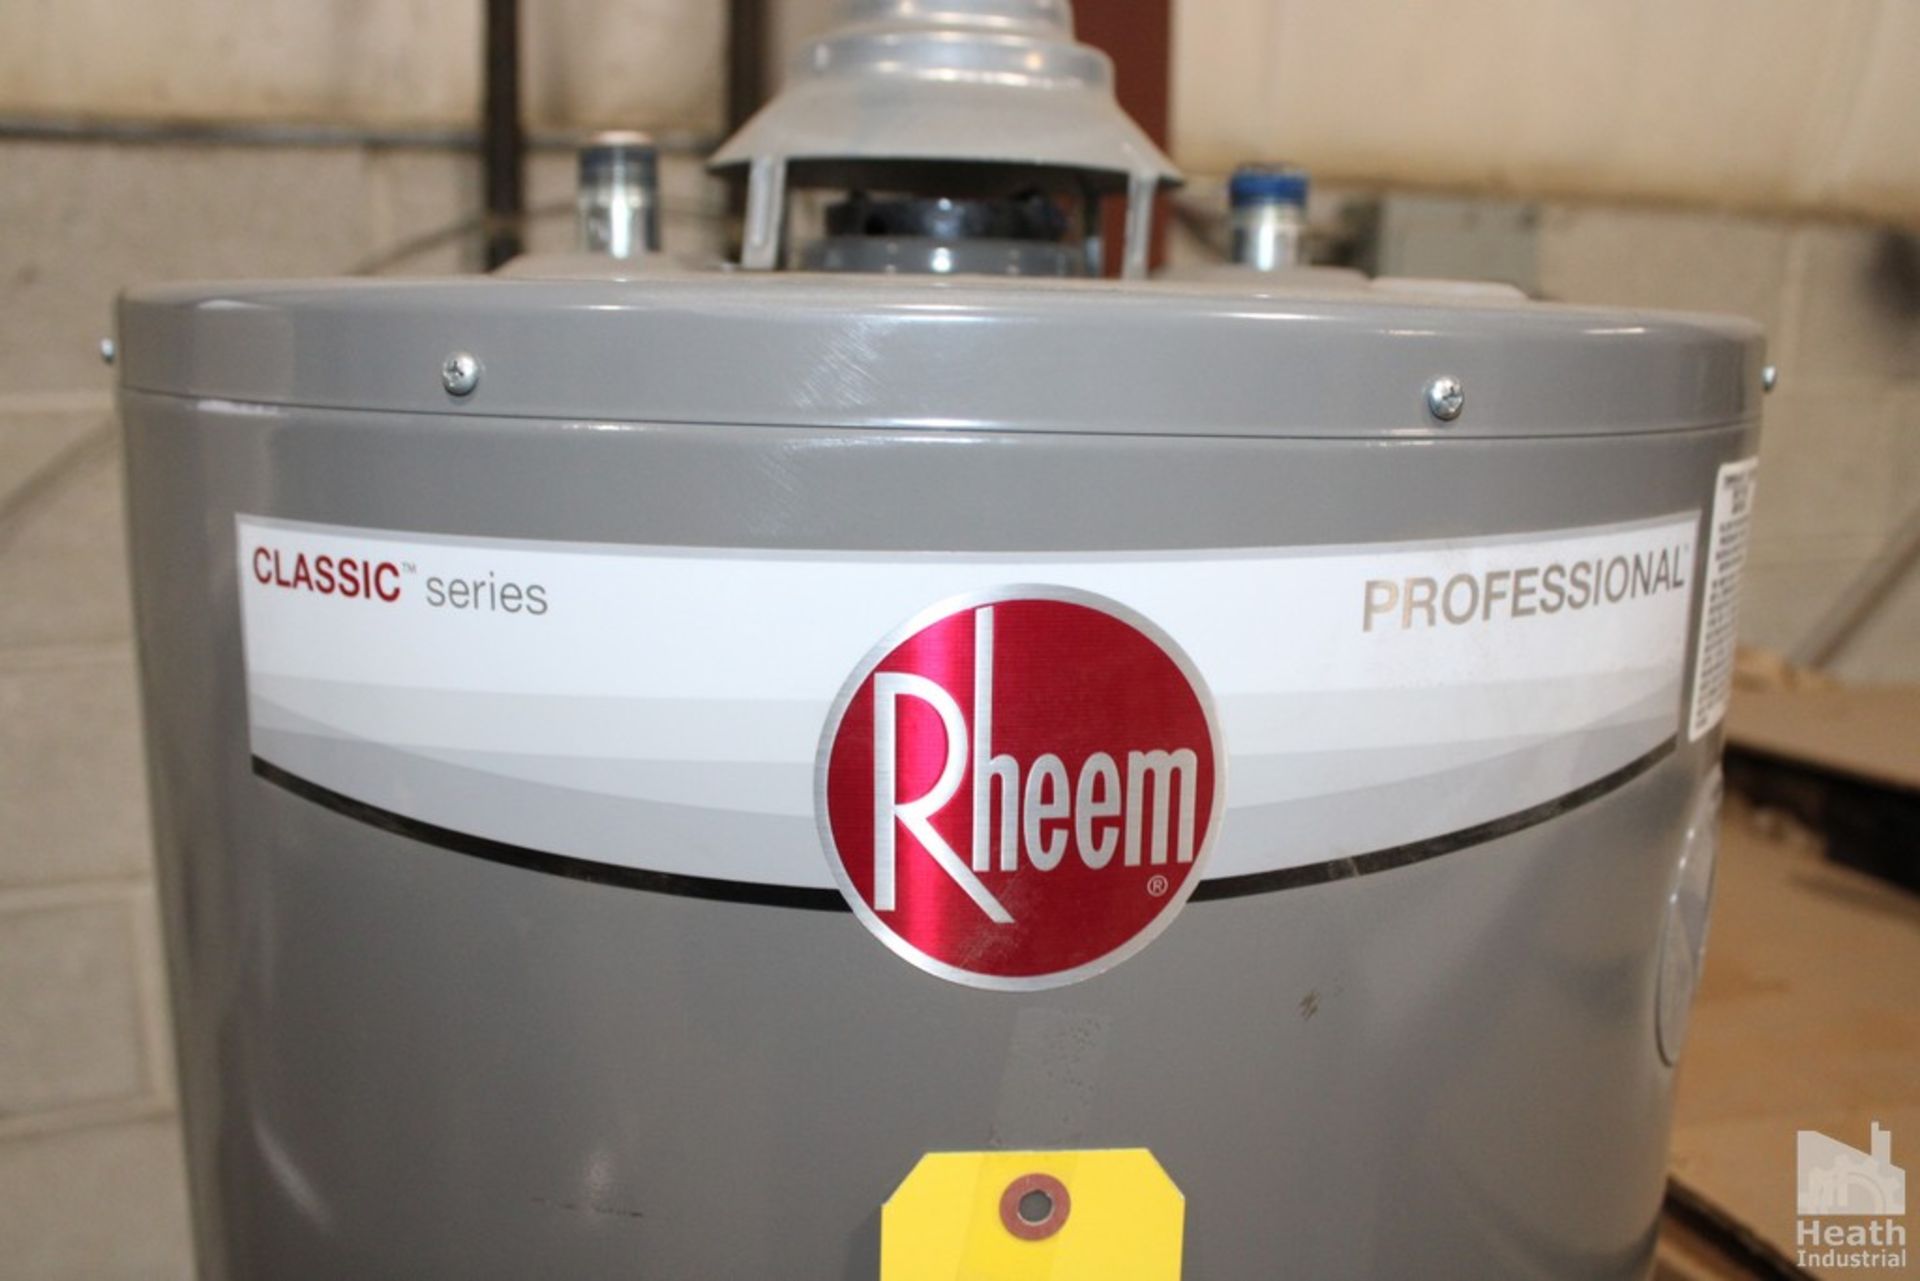 RHEEM CLASSIC SERIES MODEL PROG40-38N-RH62, 40-GAL. NATUAL GAS WATER HEATER - Image 2 of 3